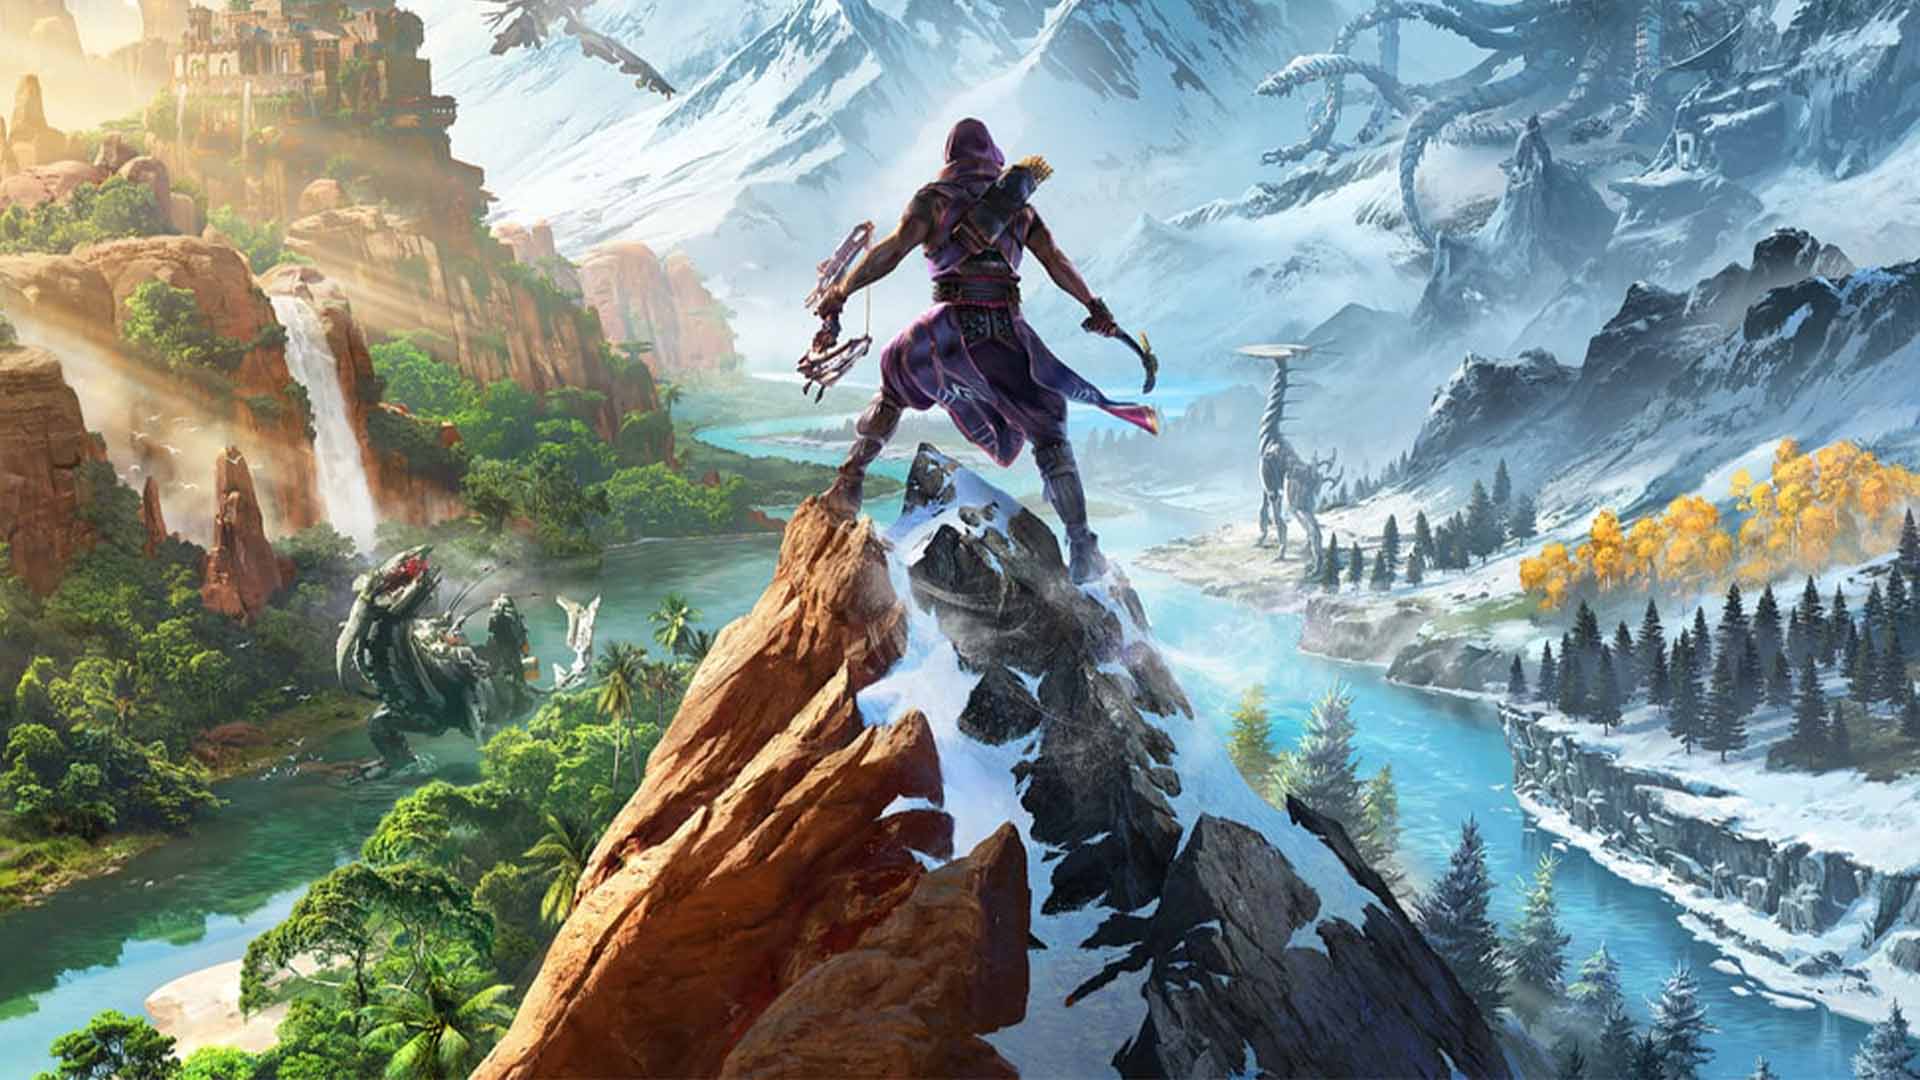 Horizon Call of the Mountain review - a visually spectacular